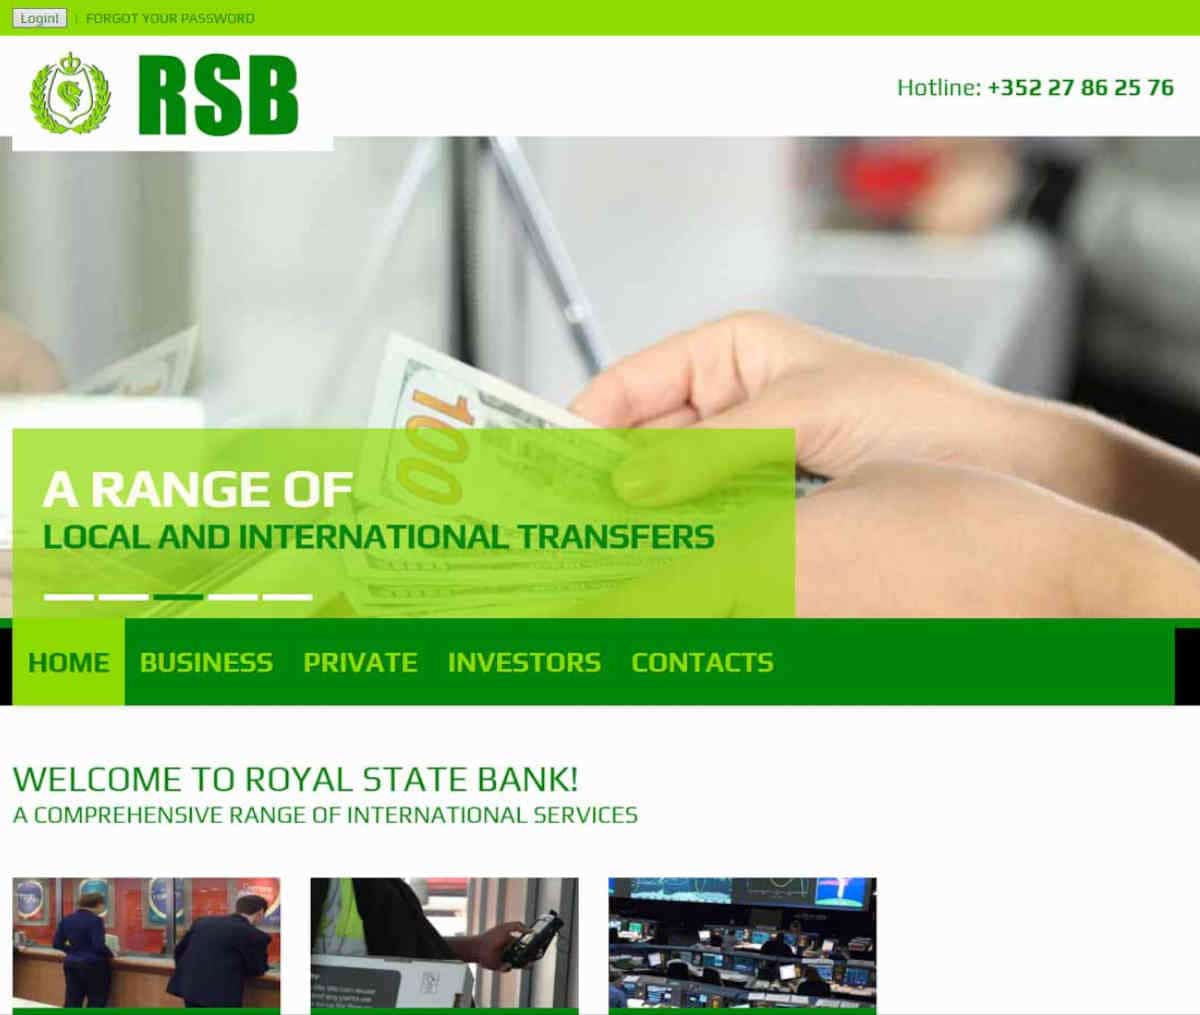 Página web de Royal State Bank